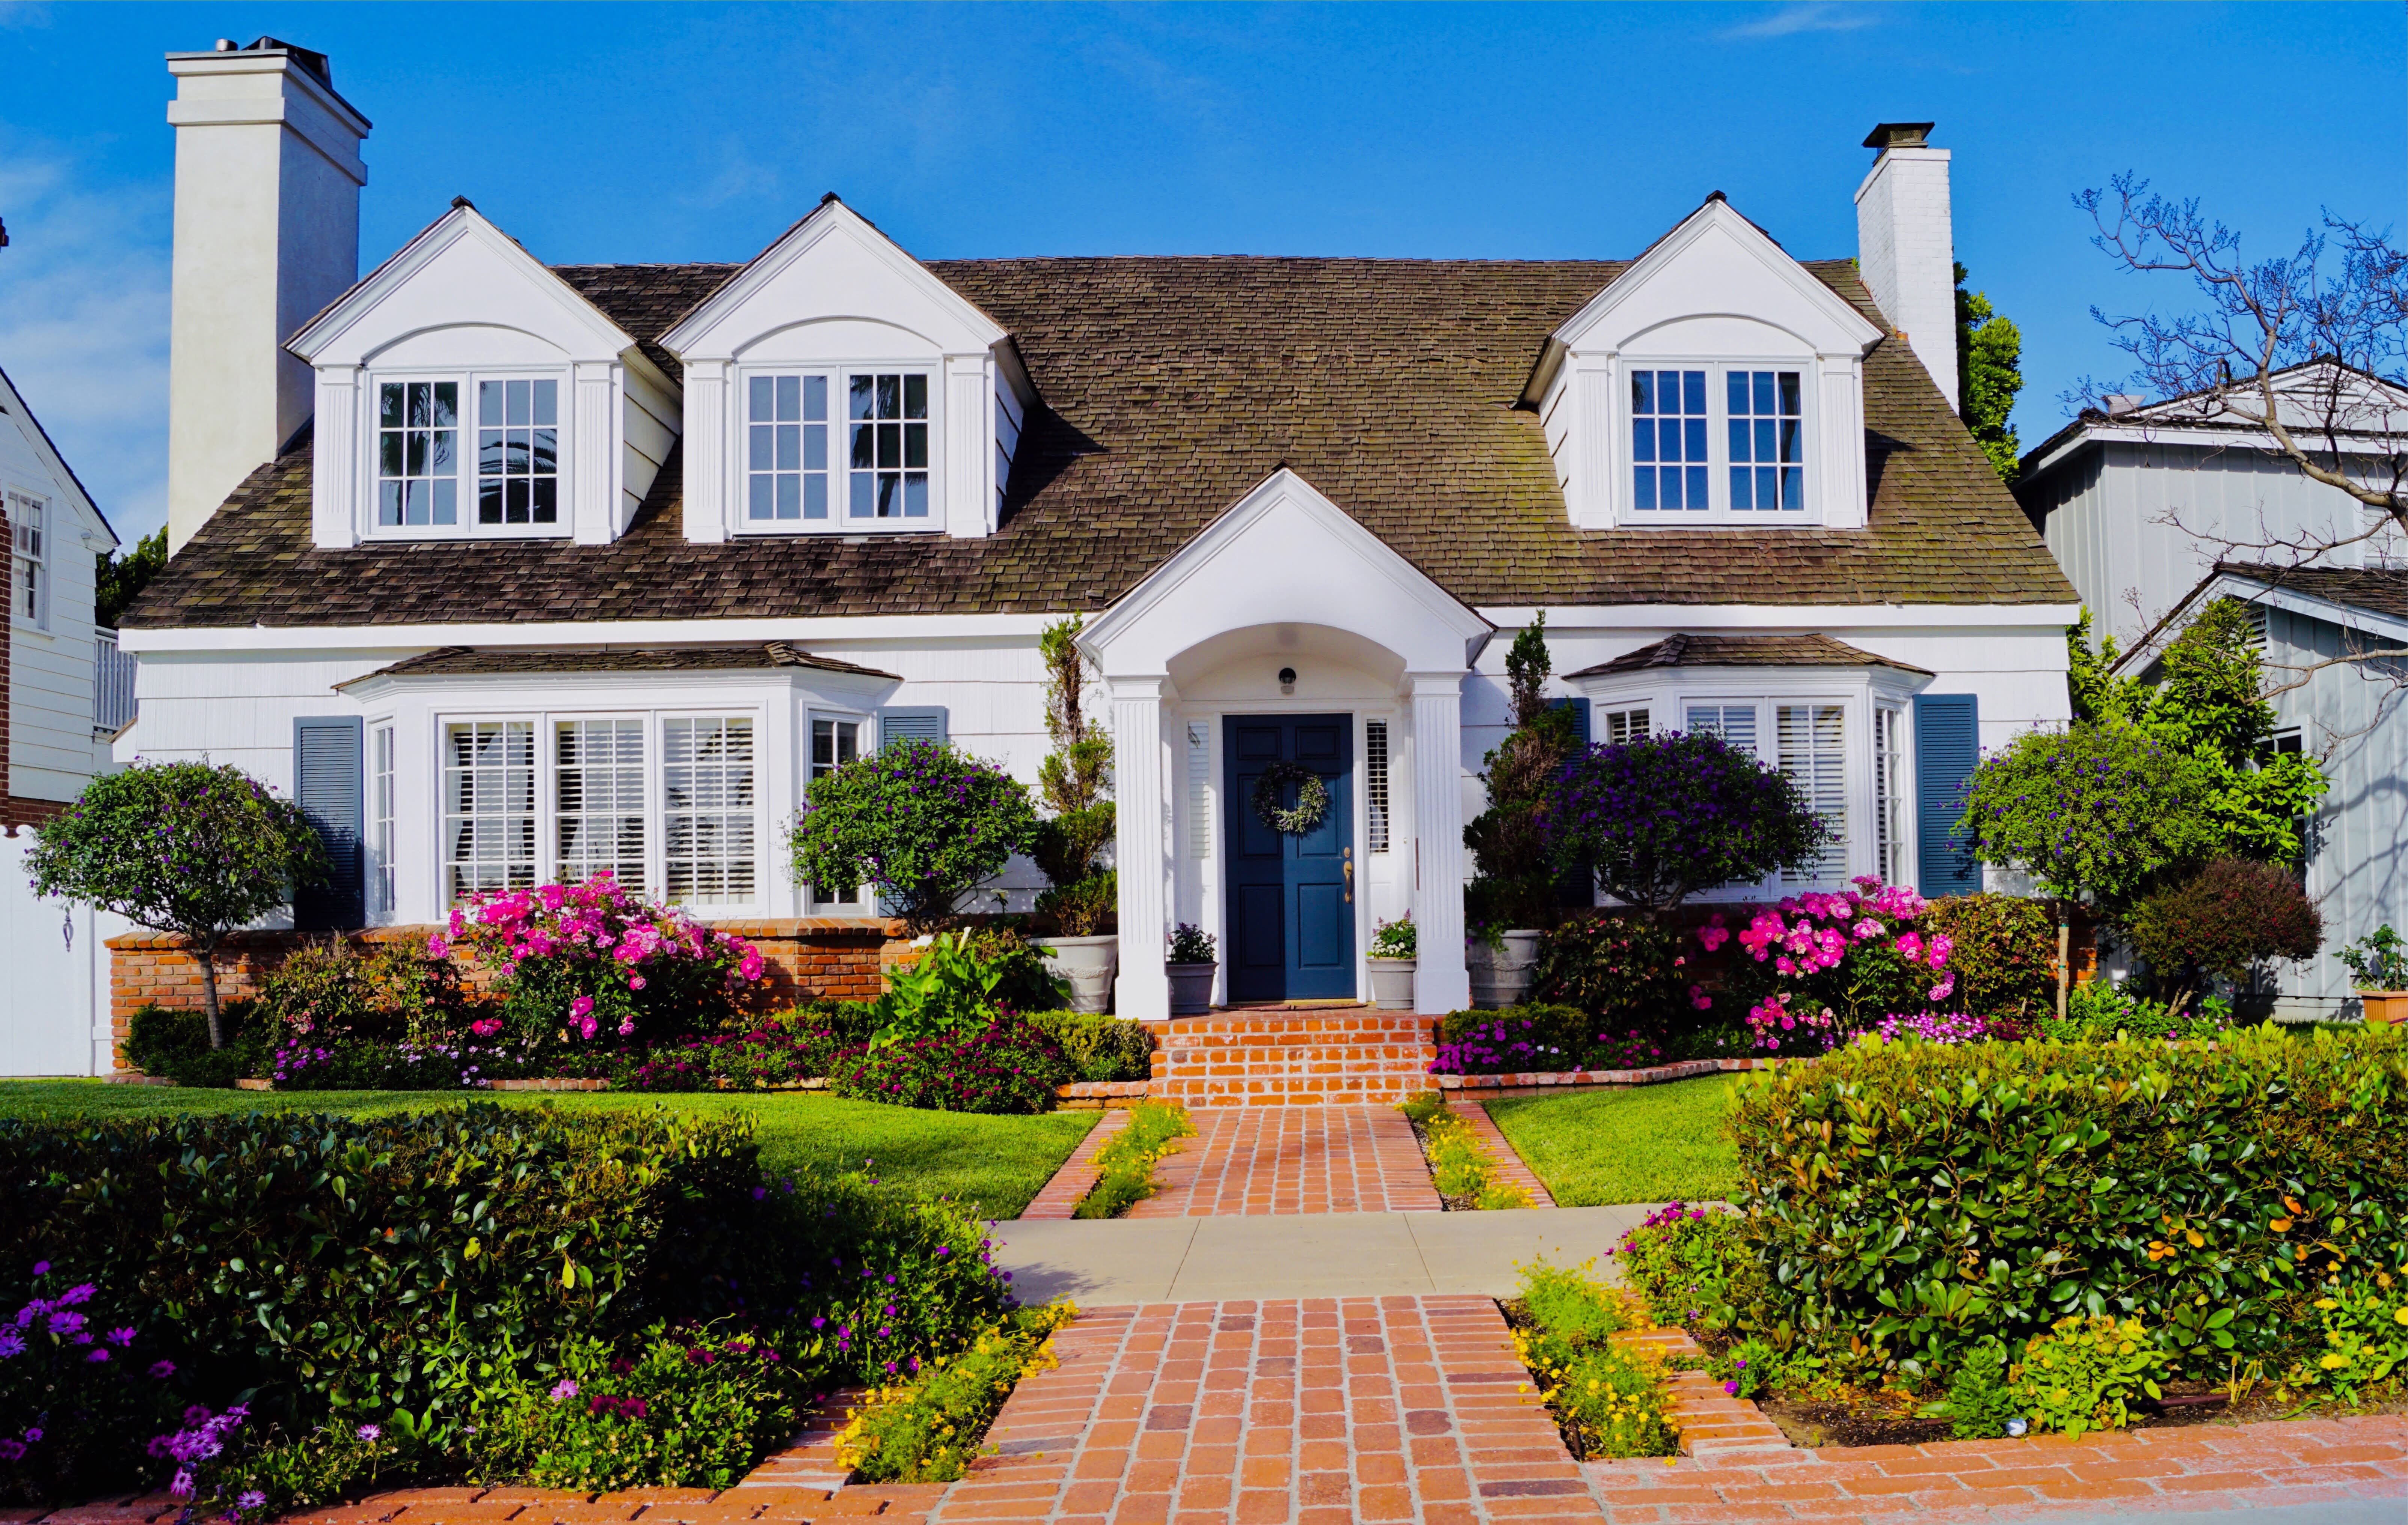 106758801-1603459526384-picture-perfect-beautiful-house-on-the-island-of-coronado-in-sunny-california-beautifully-landscaped_t20_6lJOrv.jpg?v=1603459593